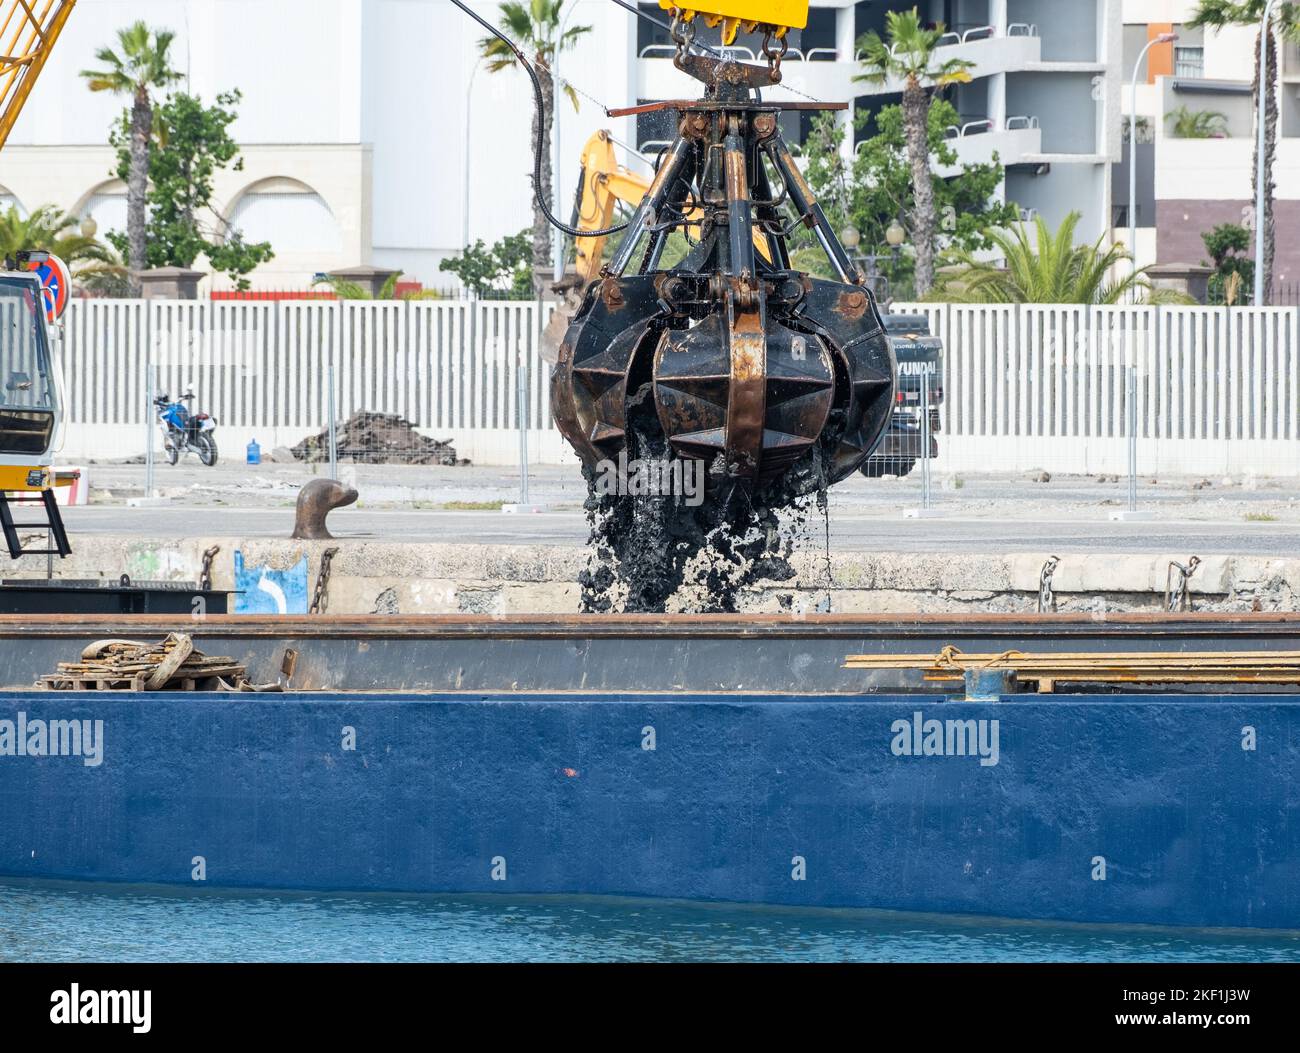 Dredger dredging oily silt from docks to increase depth for larger ships. Stock Photo